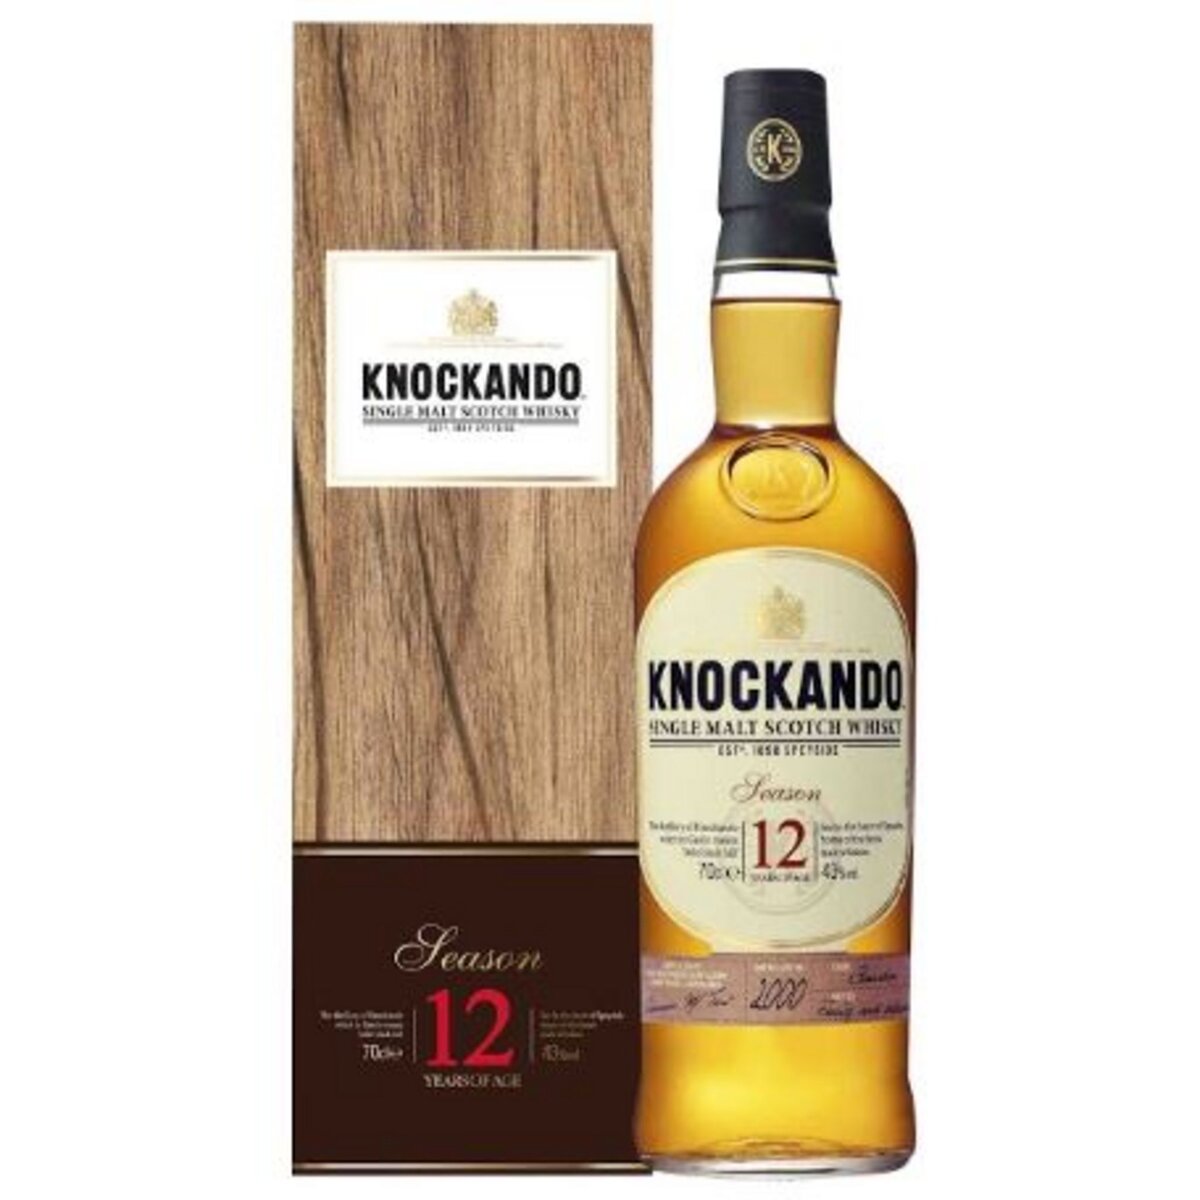 KNOCKANDO Scotch whisky single malt season 12 ans 43% avec étui 70cl